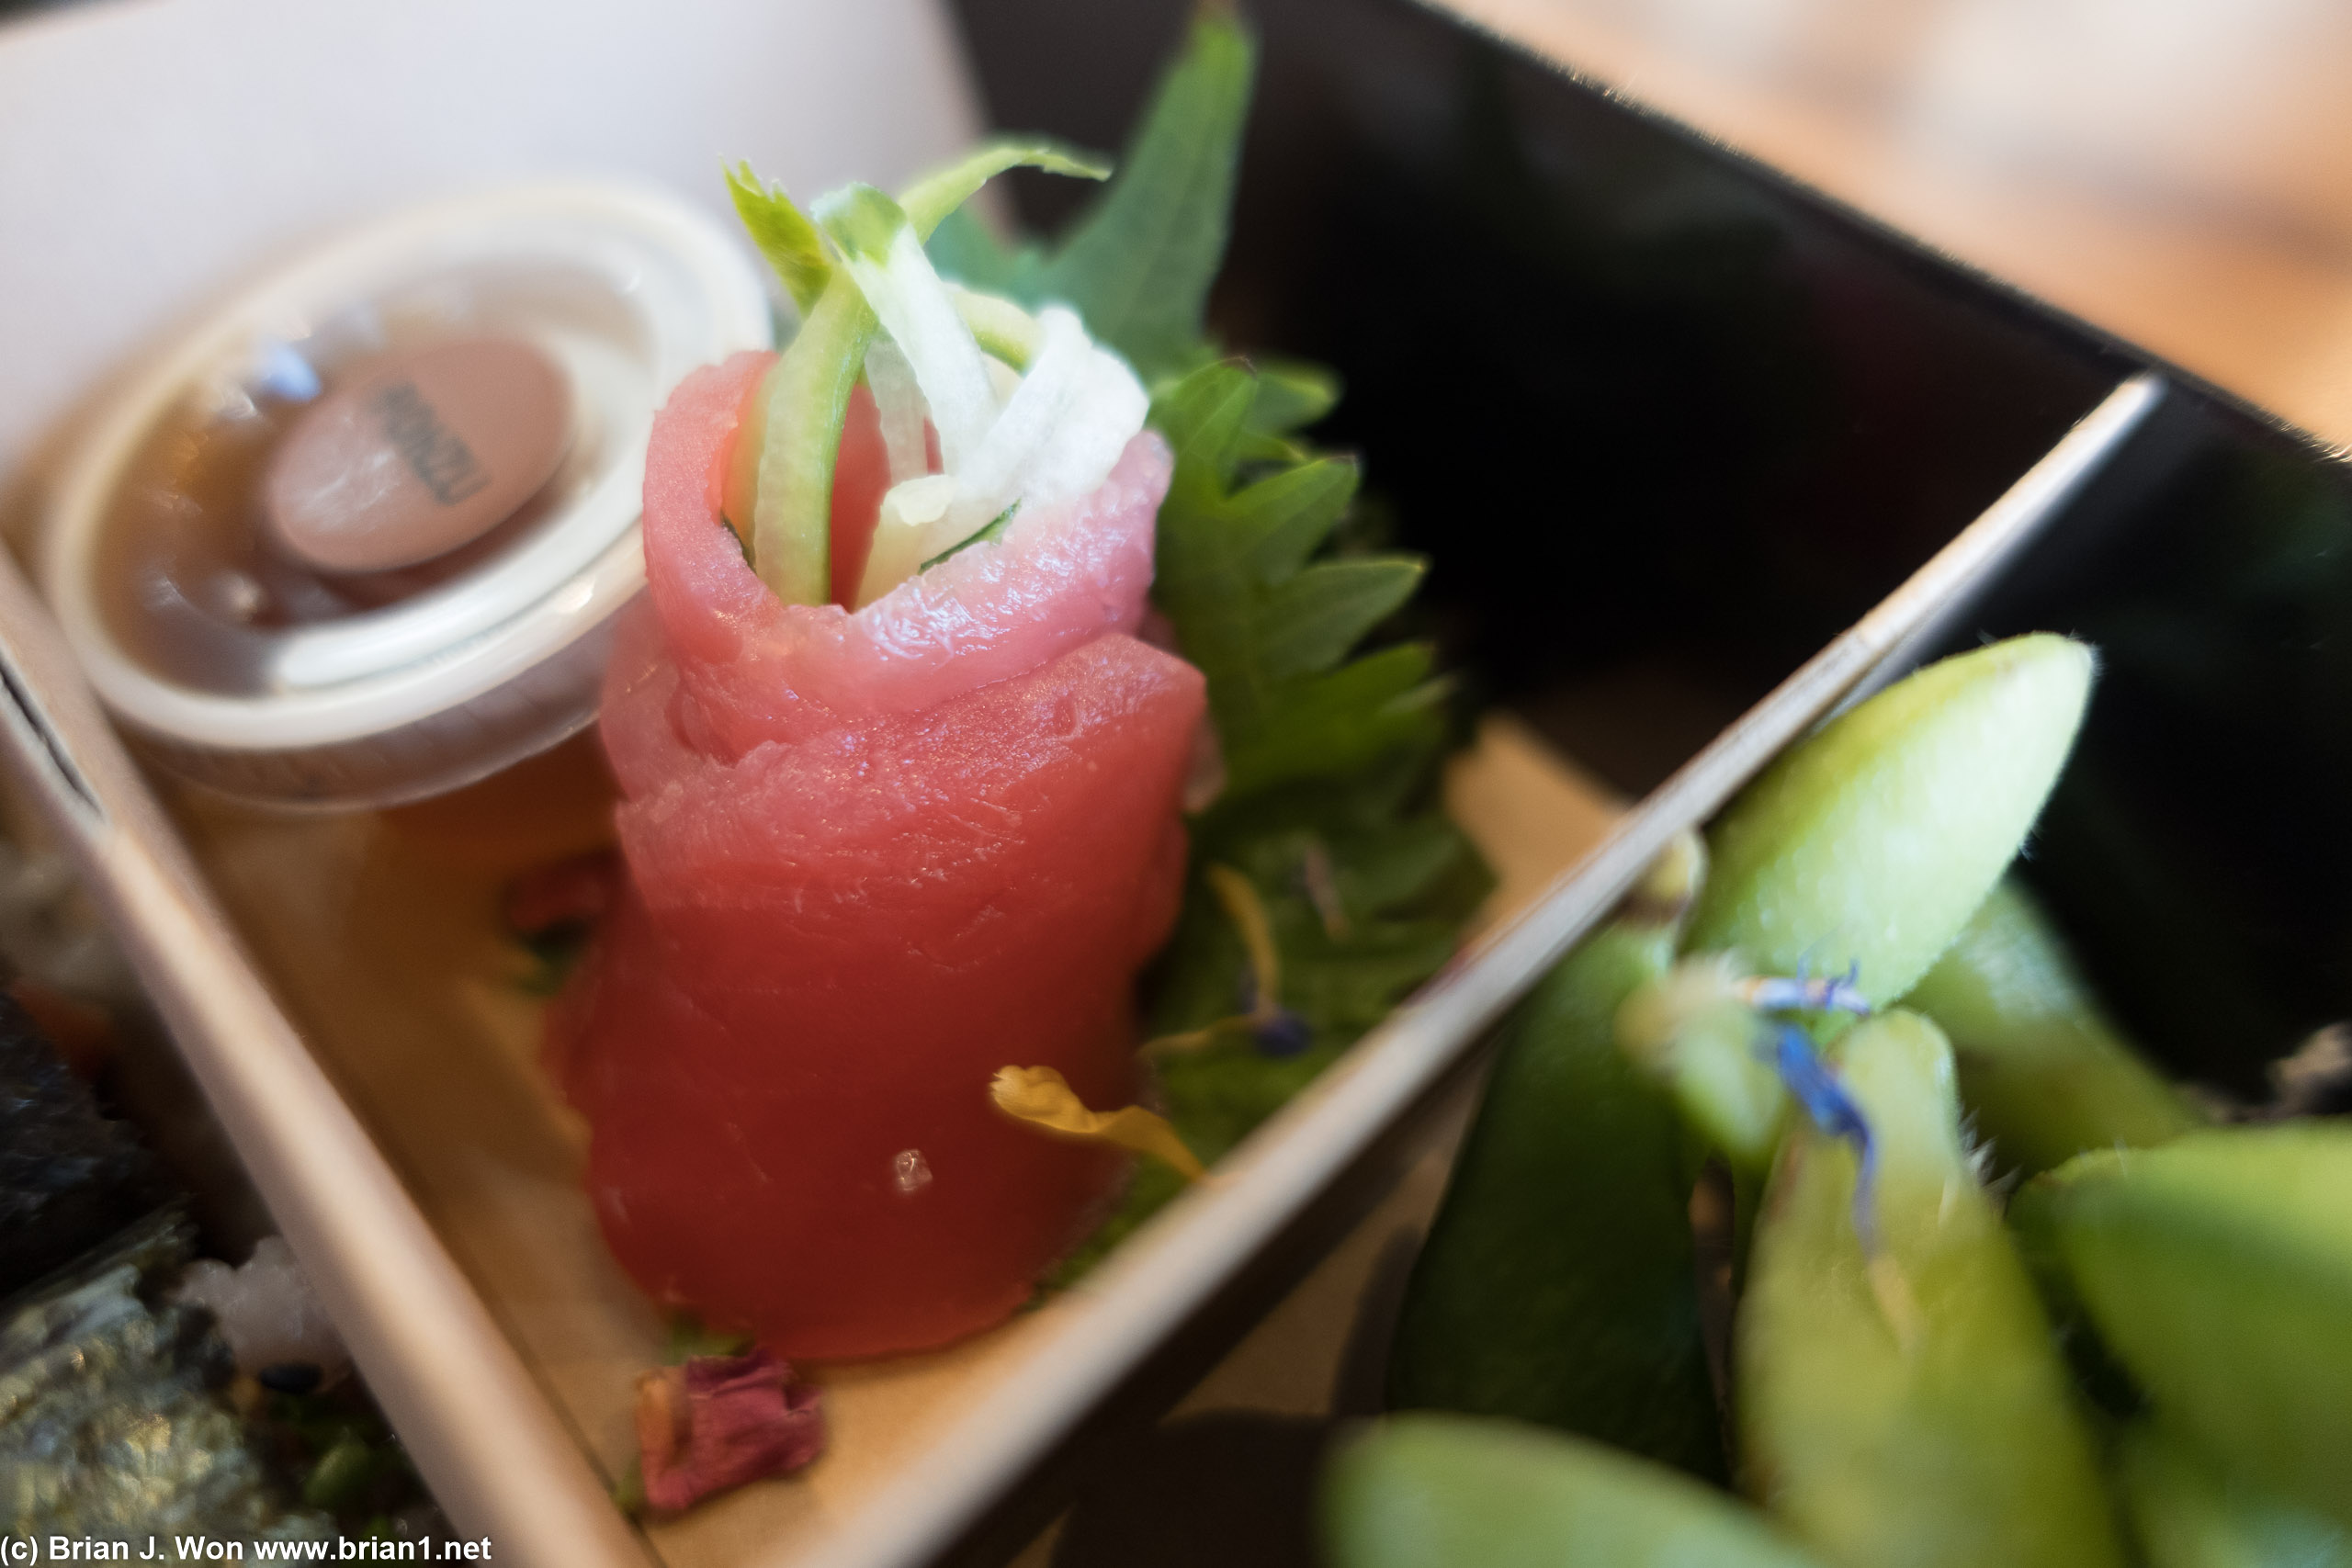 Tuna sashimi. Pretty but not much of an add.